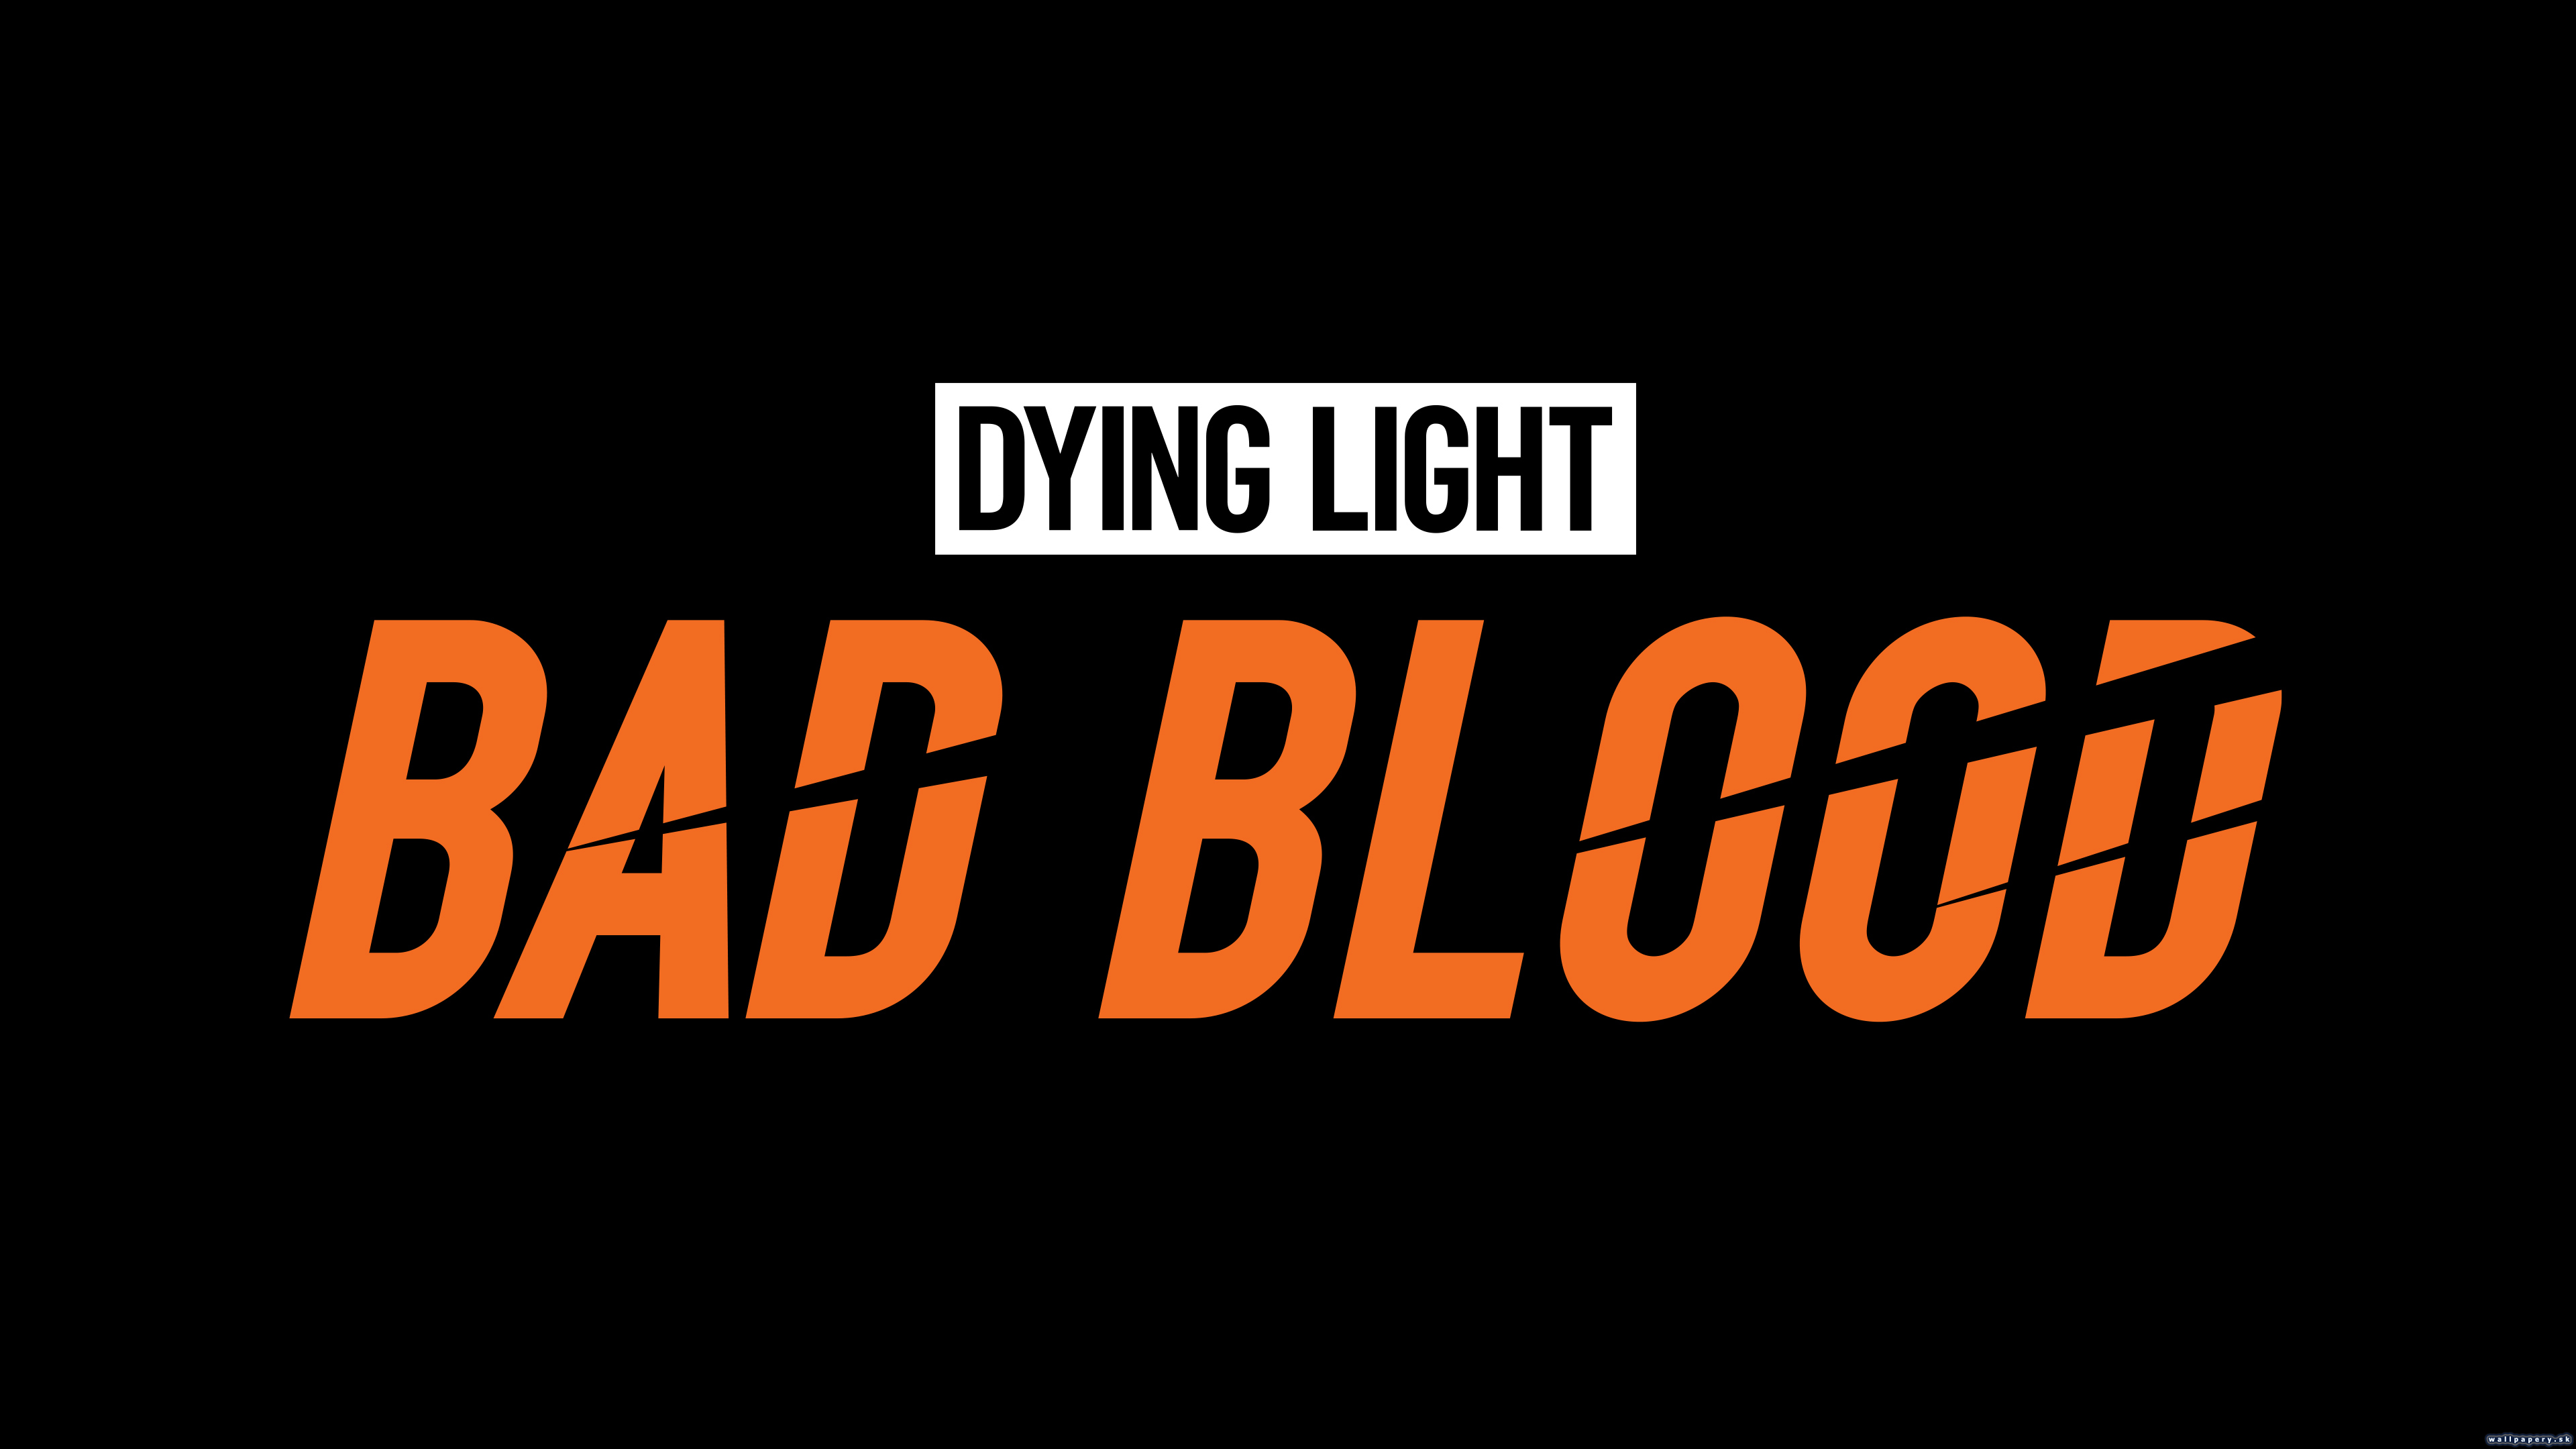 Dying Light: Bad Blood - wallpaper 2